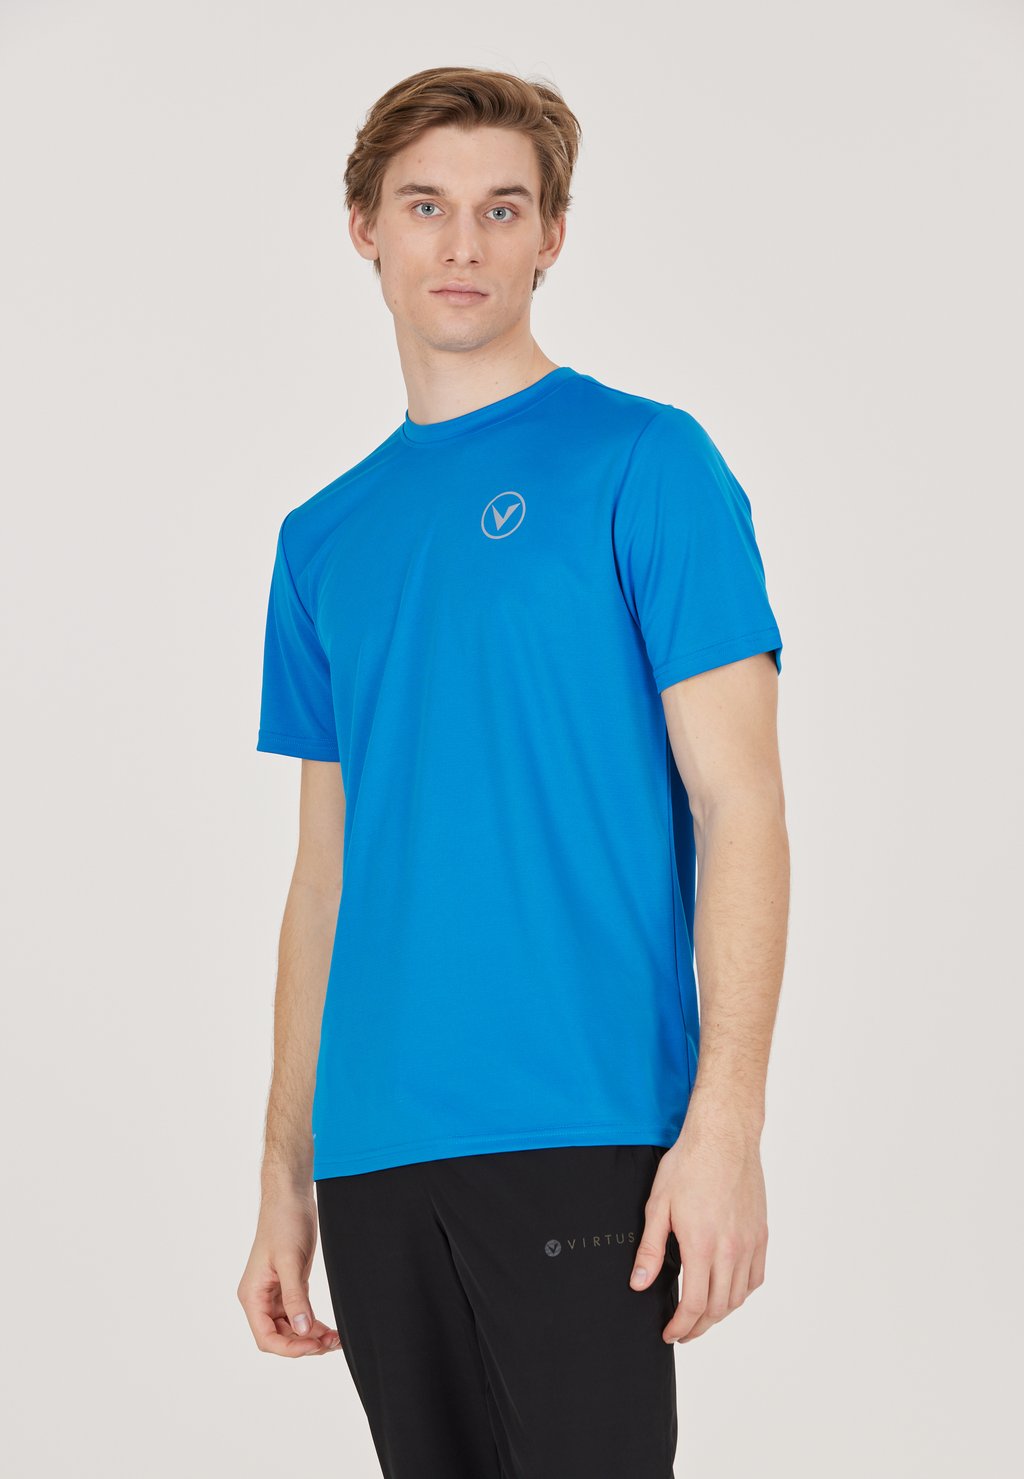 Спортивная футболка VIRTUS, цвет directoire blue